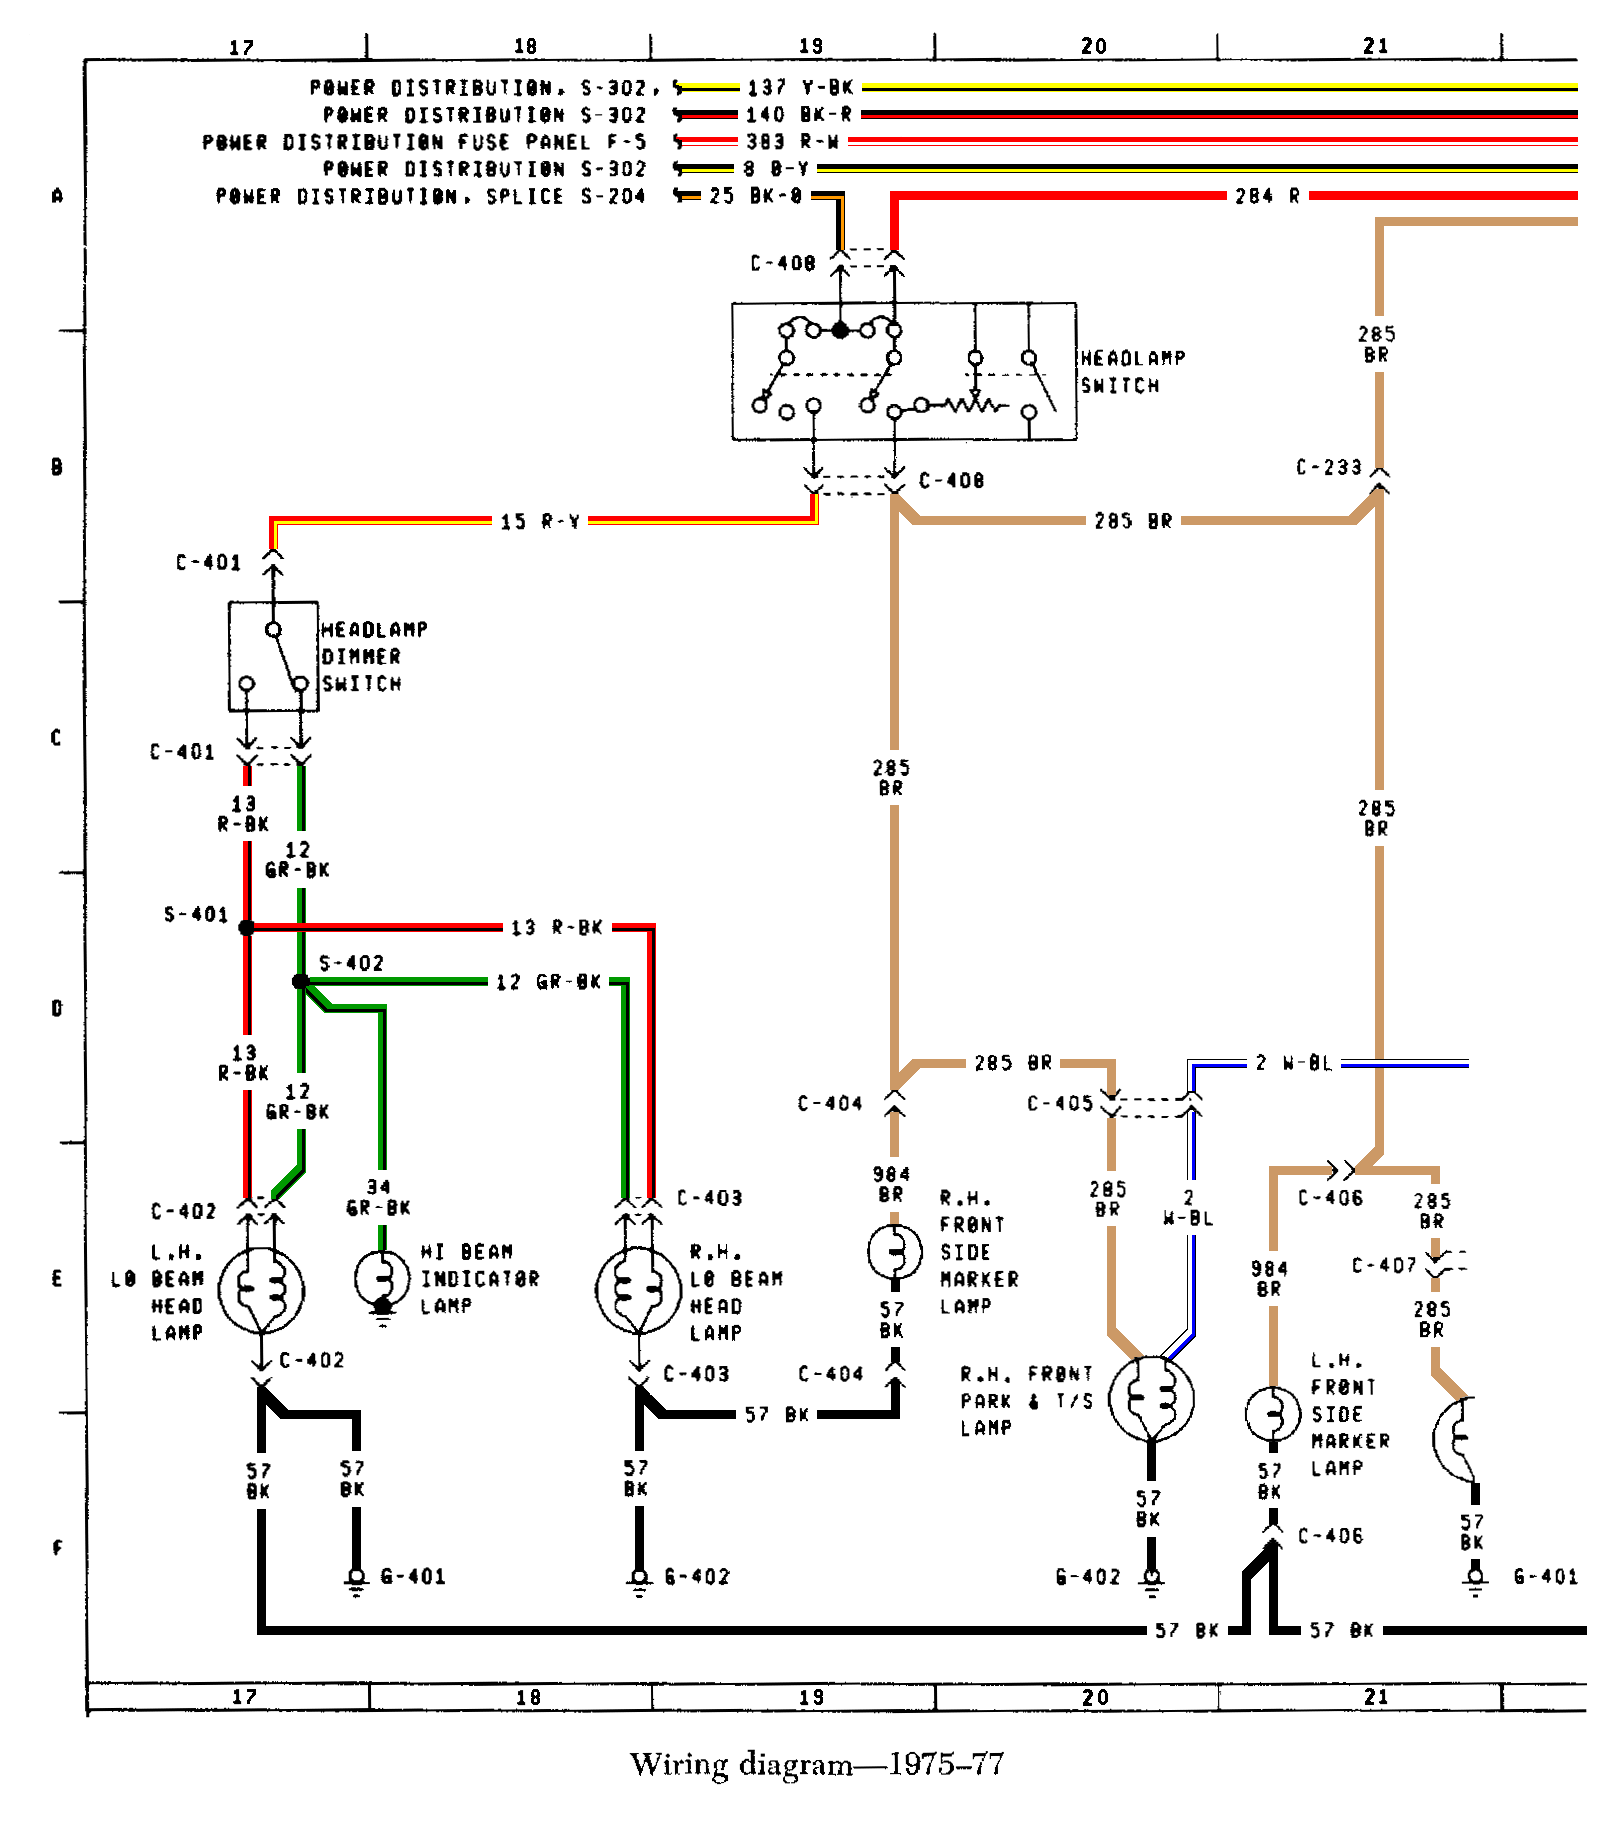 80 duraspark wiring diagram